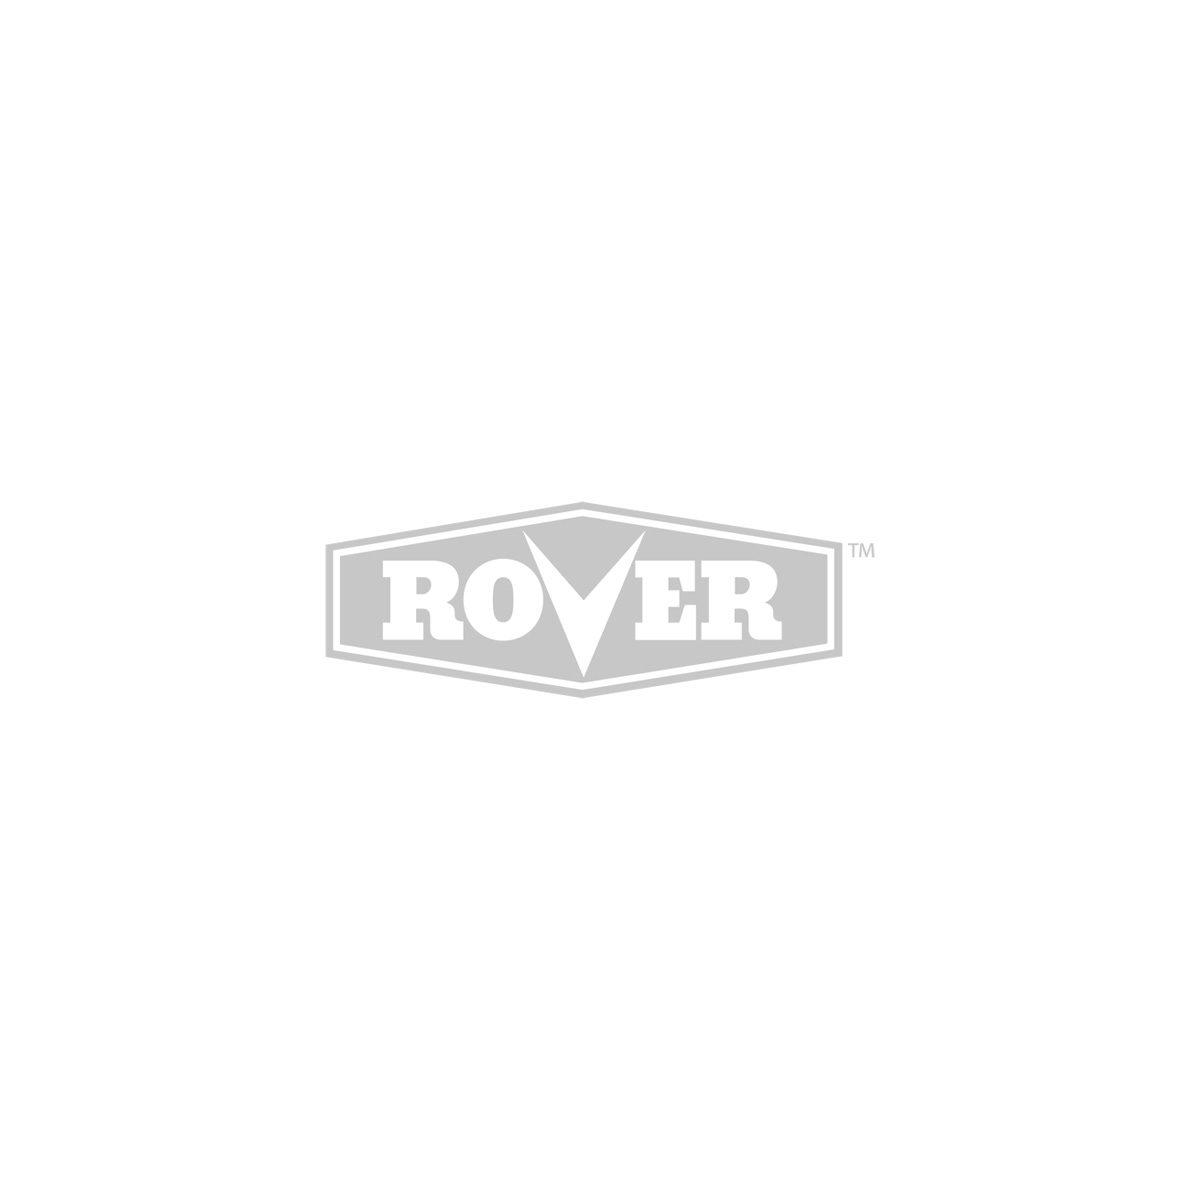 547cc Rover Engine- 5 Year Rover Domestic Warranty.